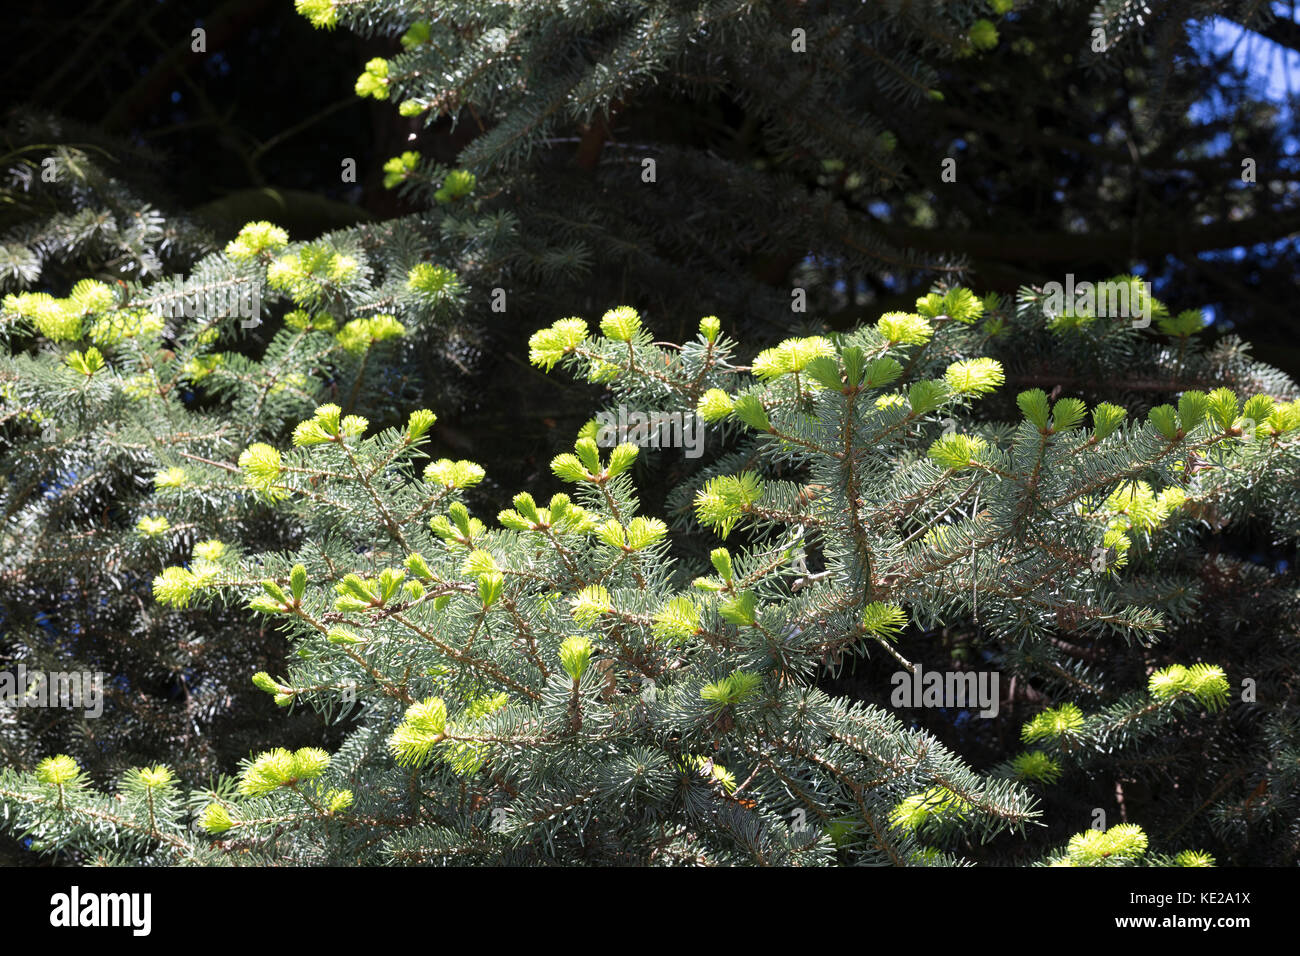 Griechische Tanne, Kefalonische Tanne, Abies cephalonica, Abies alba subsp. cephalonica, Greek fir, Grecian fir, Le sapin de Céphalonie Stock Photo